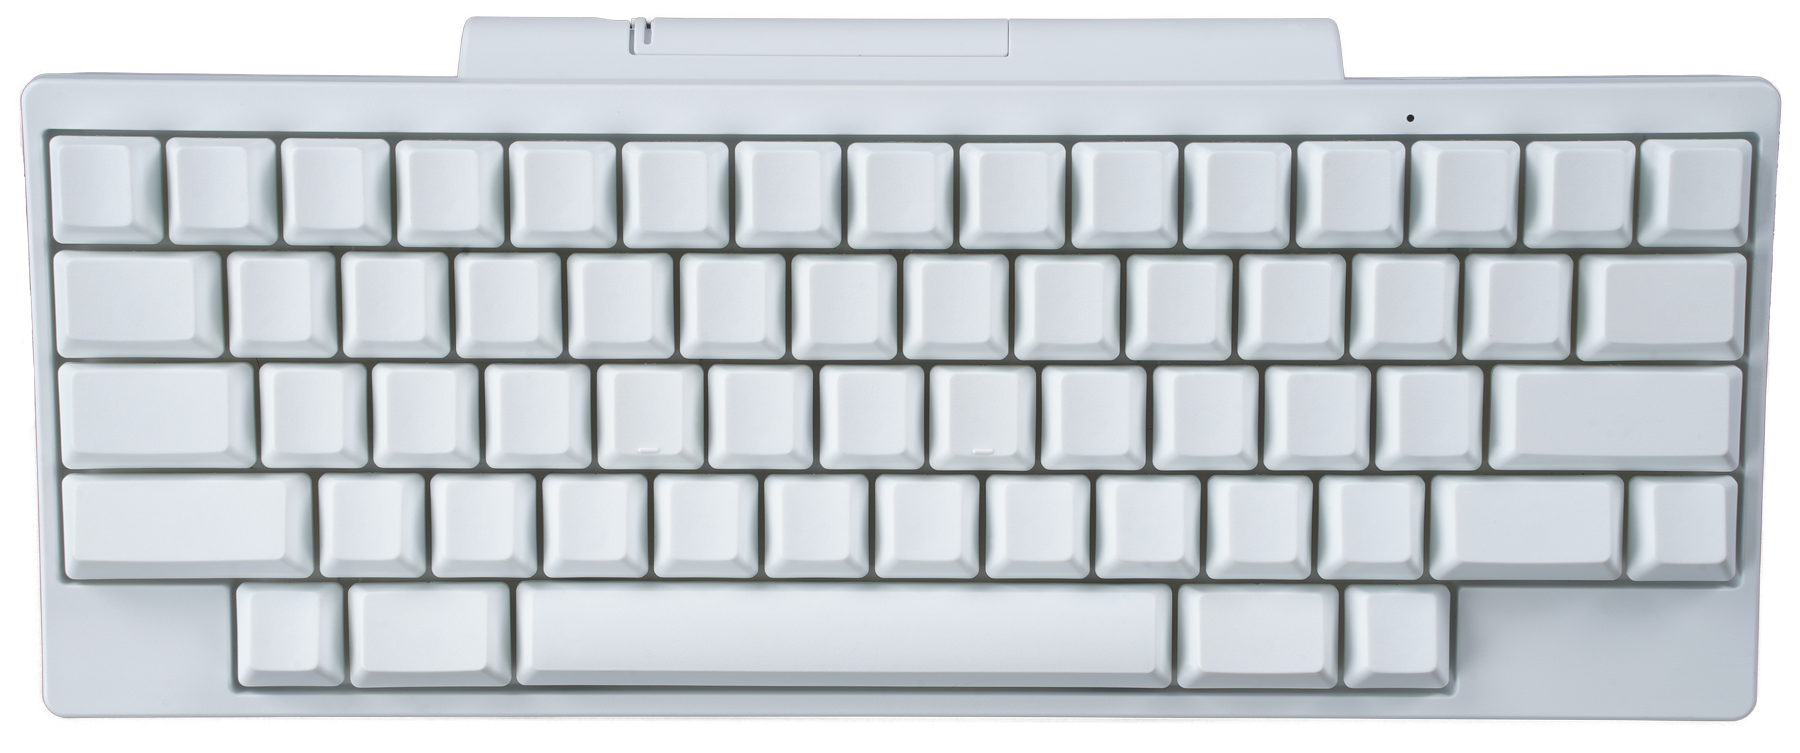 Happy hacking keyboard hybrid type S snow blank keycaps